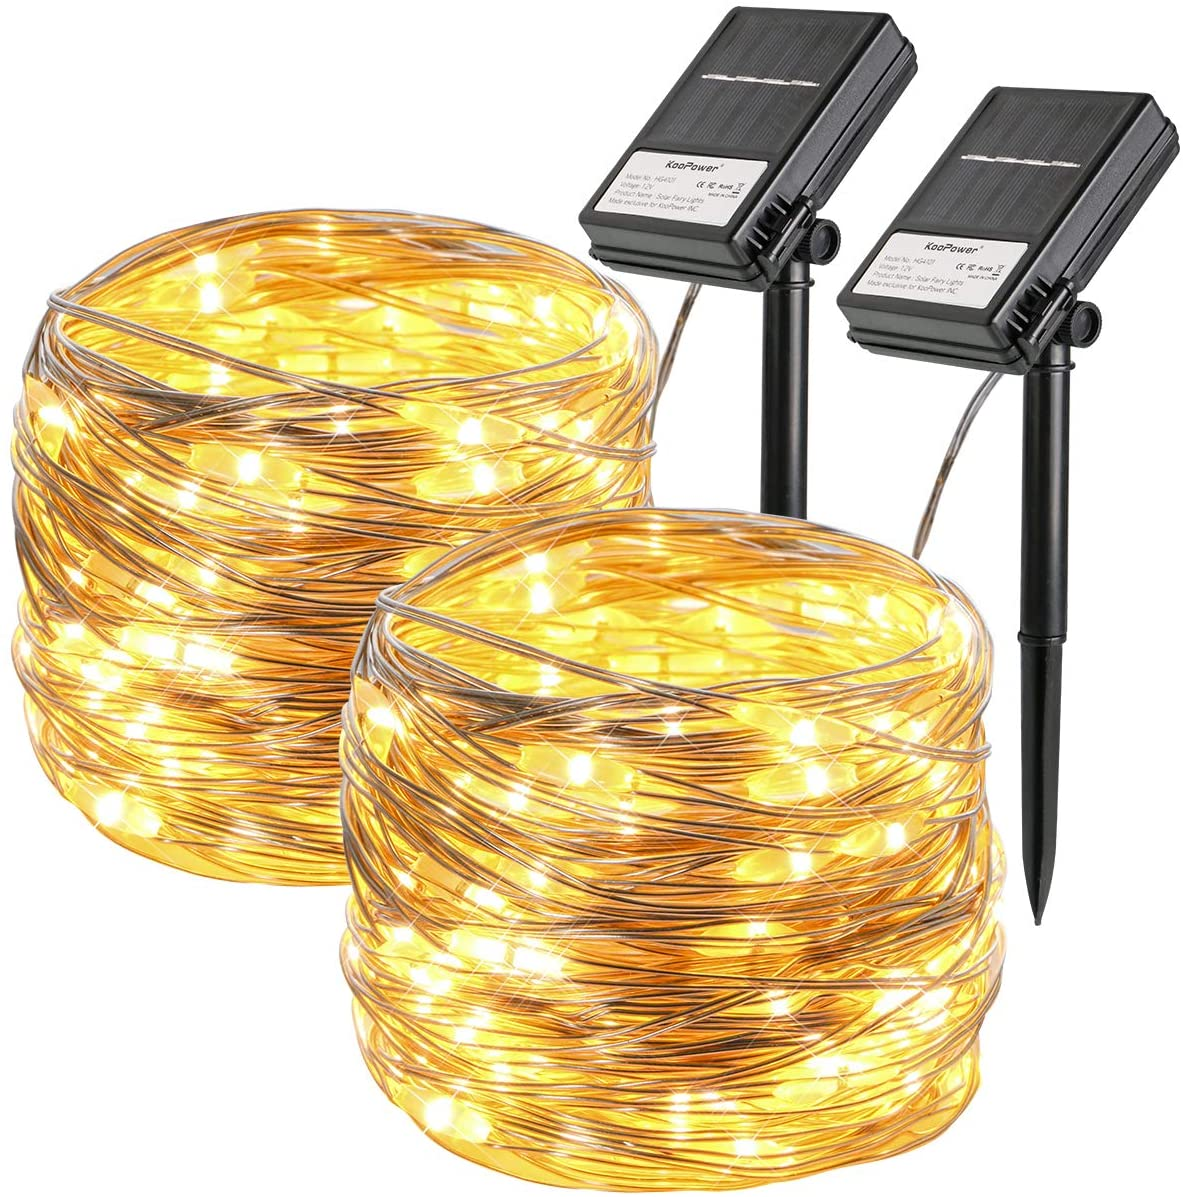 2 Pack Solar String Lights, 33ft 100 Led Solar and Battery Powered String Lights 